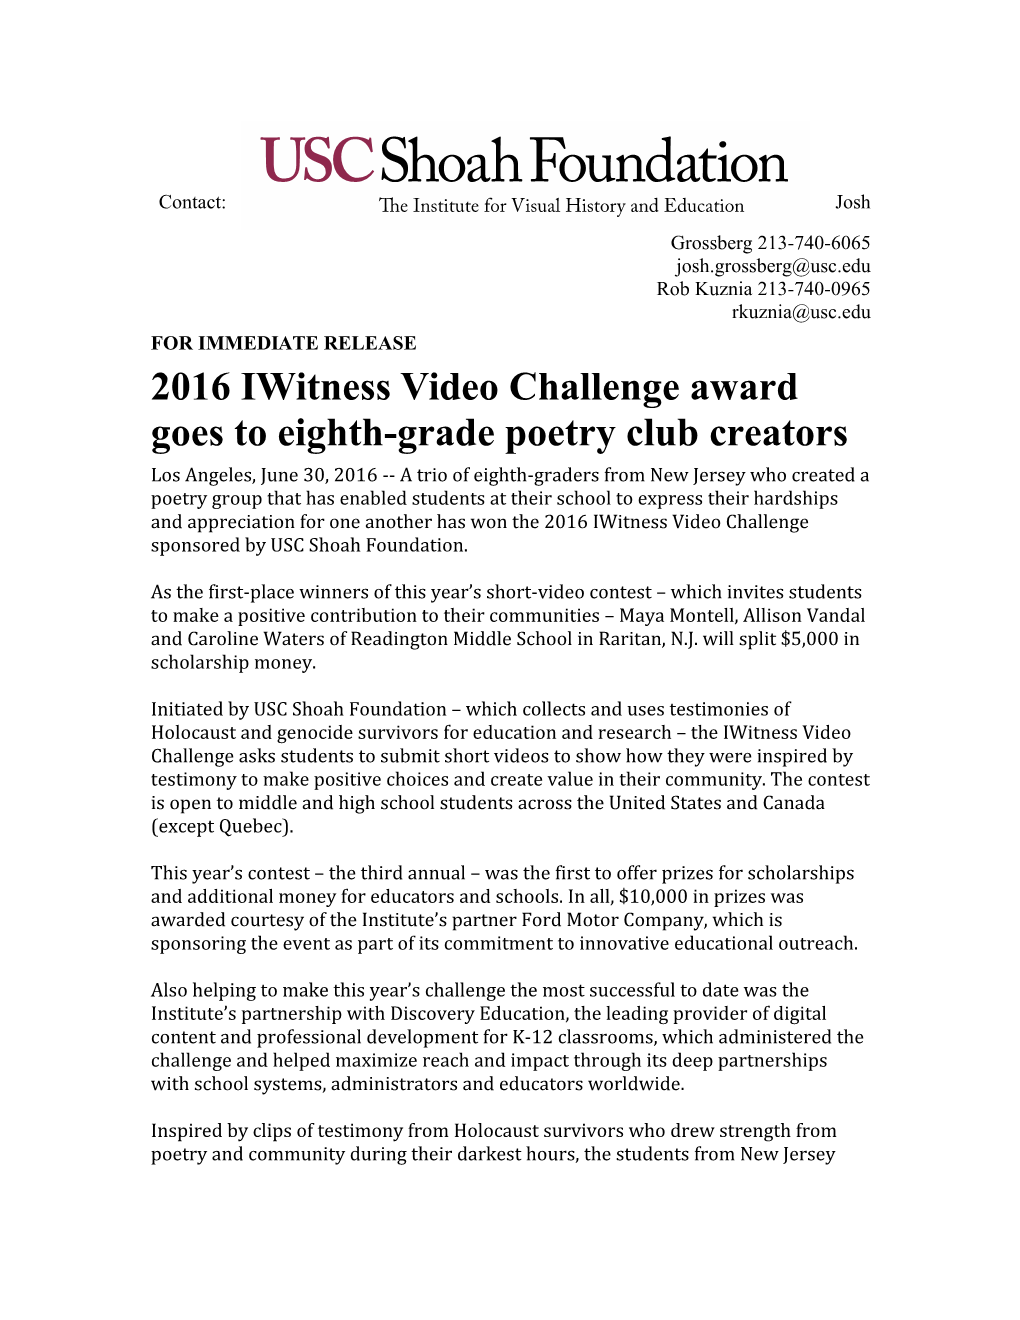 2016 Iwitness Video Challenge Award Goes to Eighth-Grade Poetry Club Creators